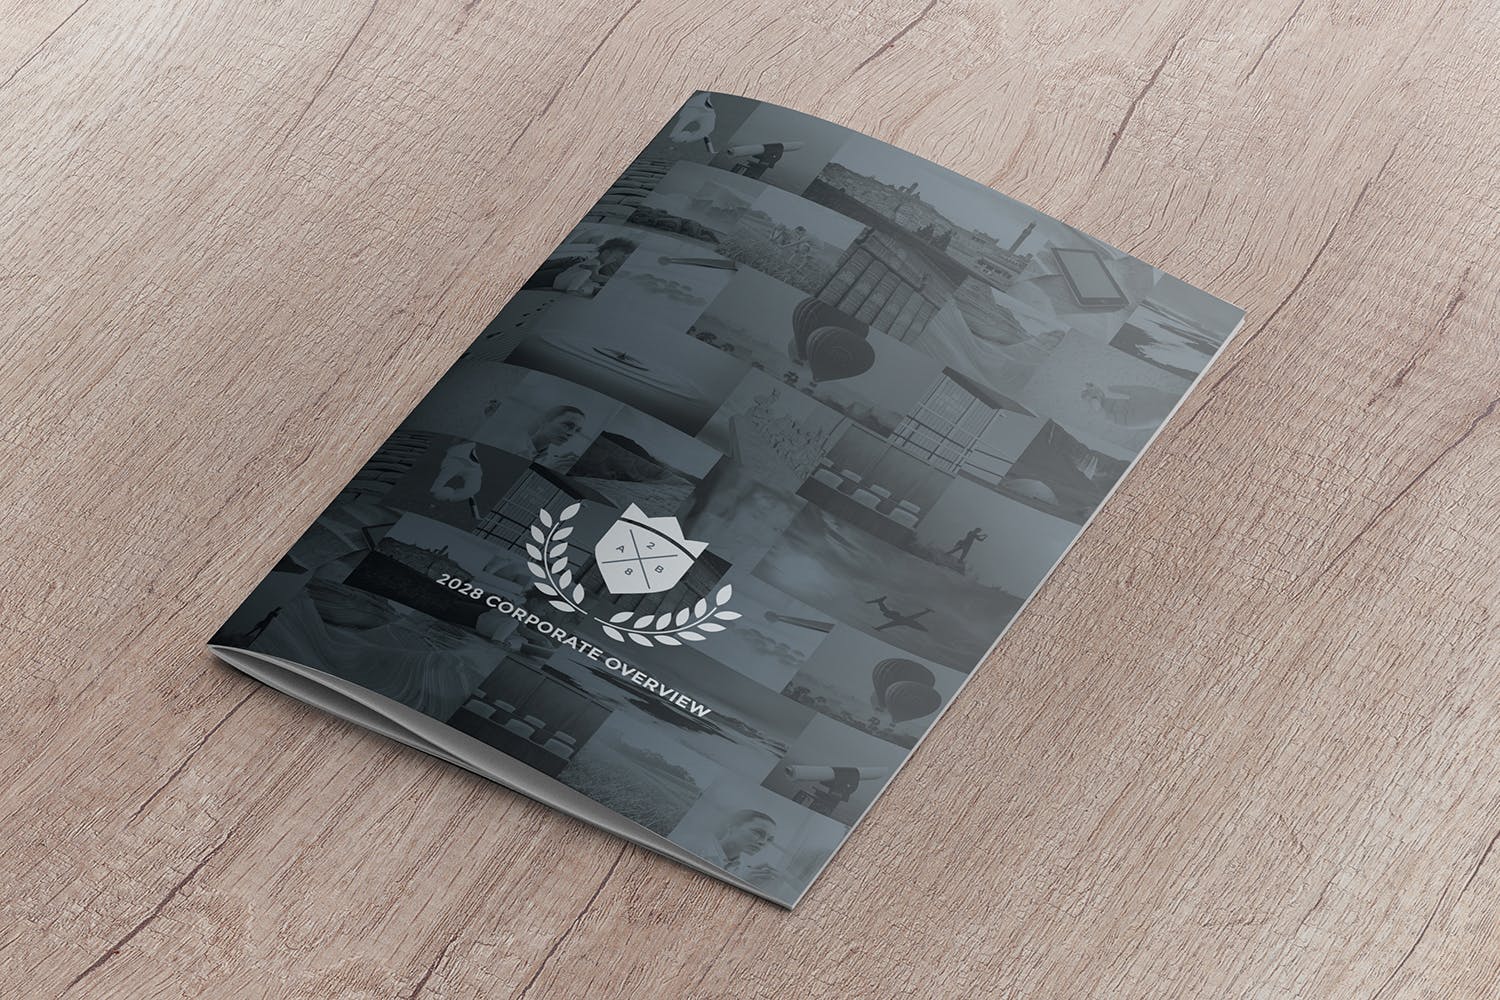 A4尺寸企业/品牌宣传册封面效果图样机蚂蚁素材精选模板 A4 Brochure Cover Mockup Perspective View插图(2)